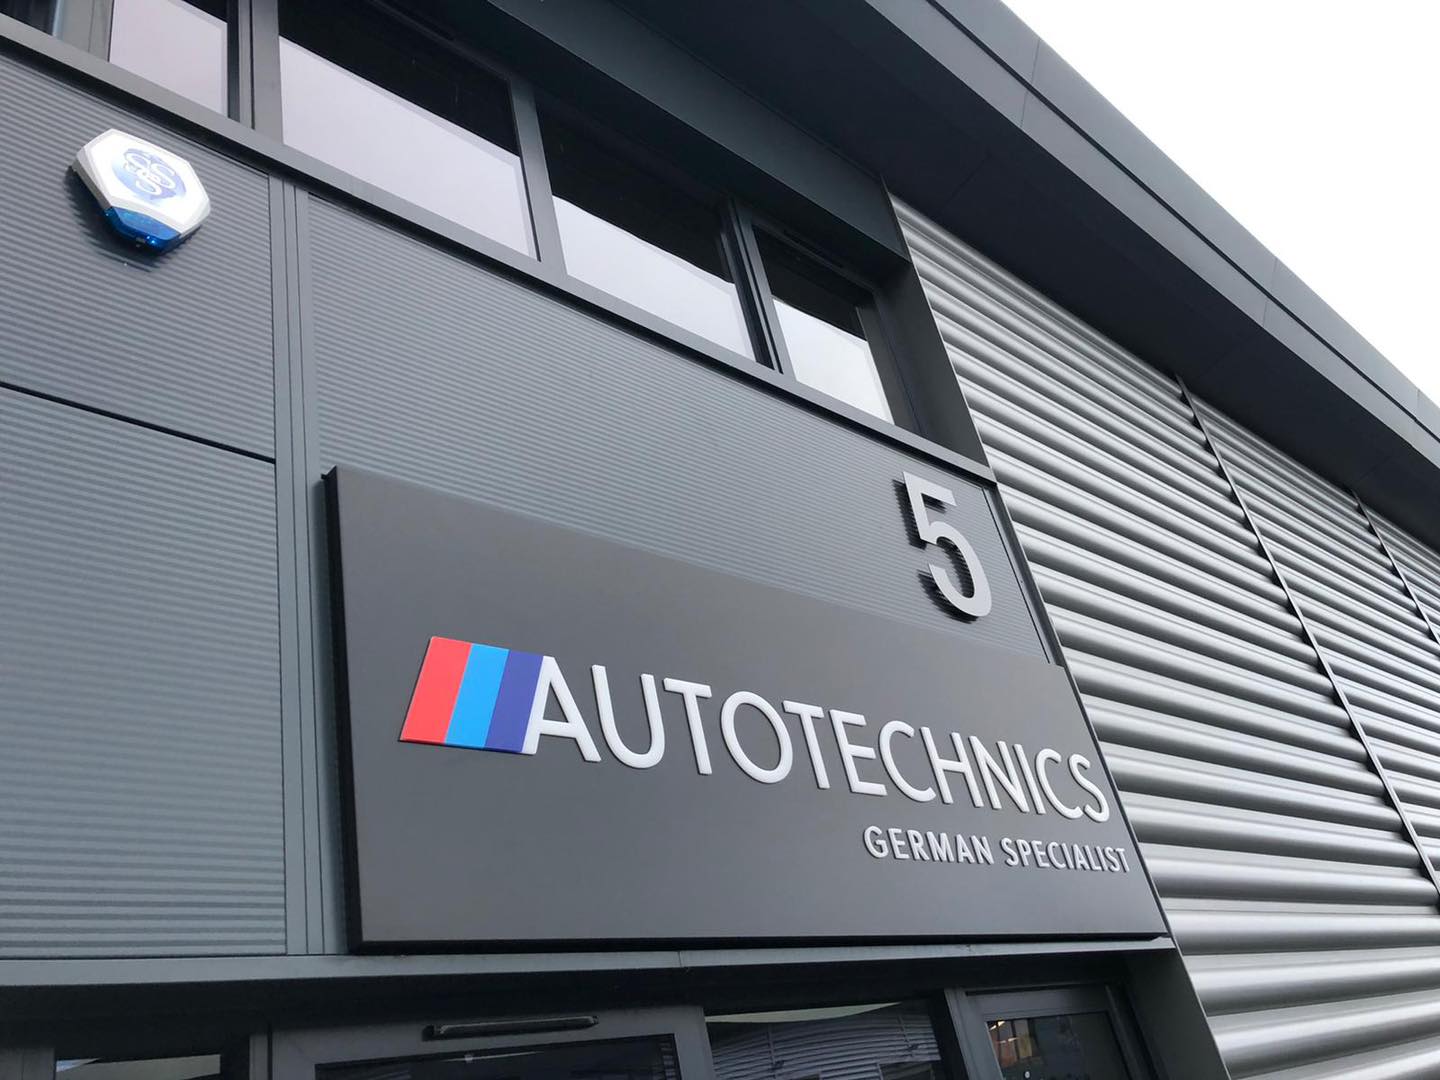 Autotechnics premises exterior